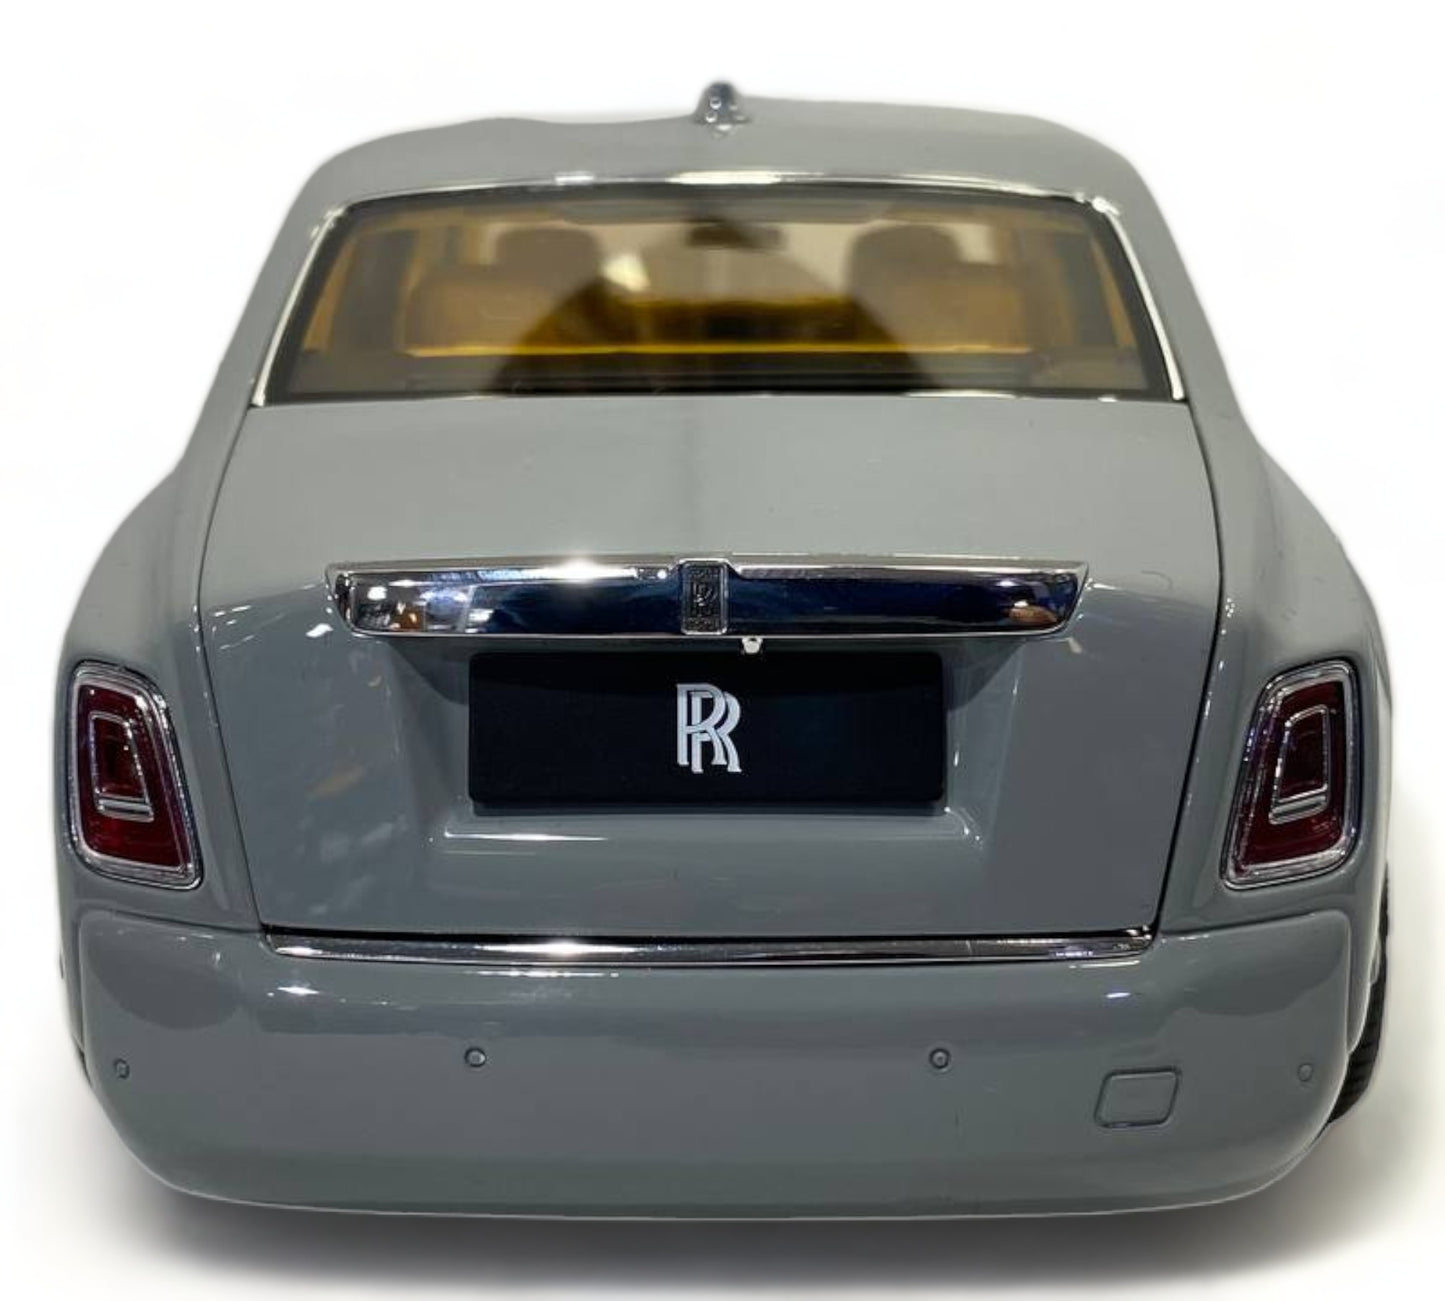 1/18 Diecast Metal Full Opening - Rolls-Royce Phantom 8 by Kengfai, Grey|Sold in Dturman.com Dubai UAE.